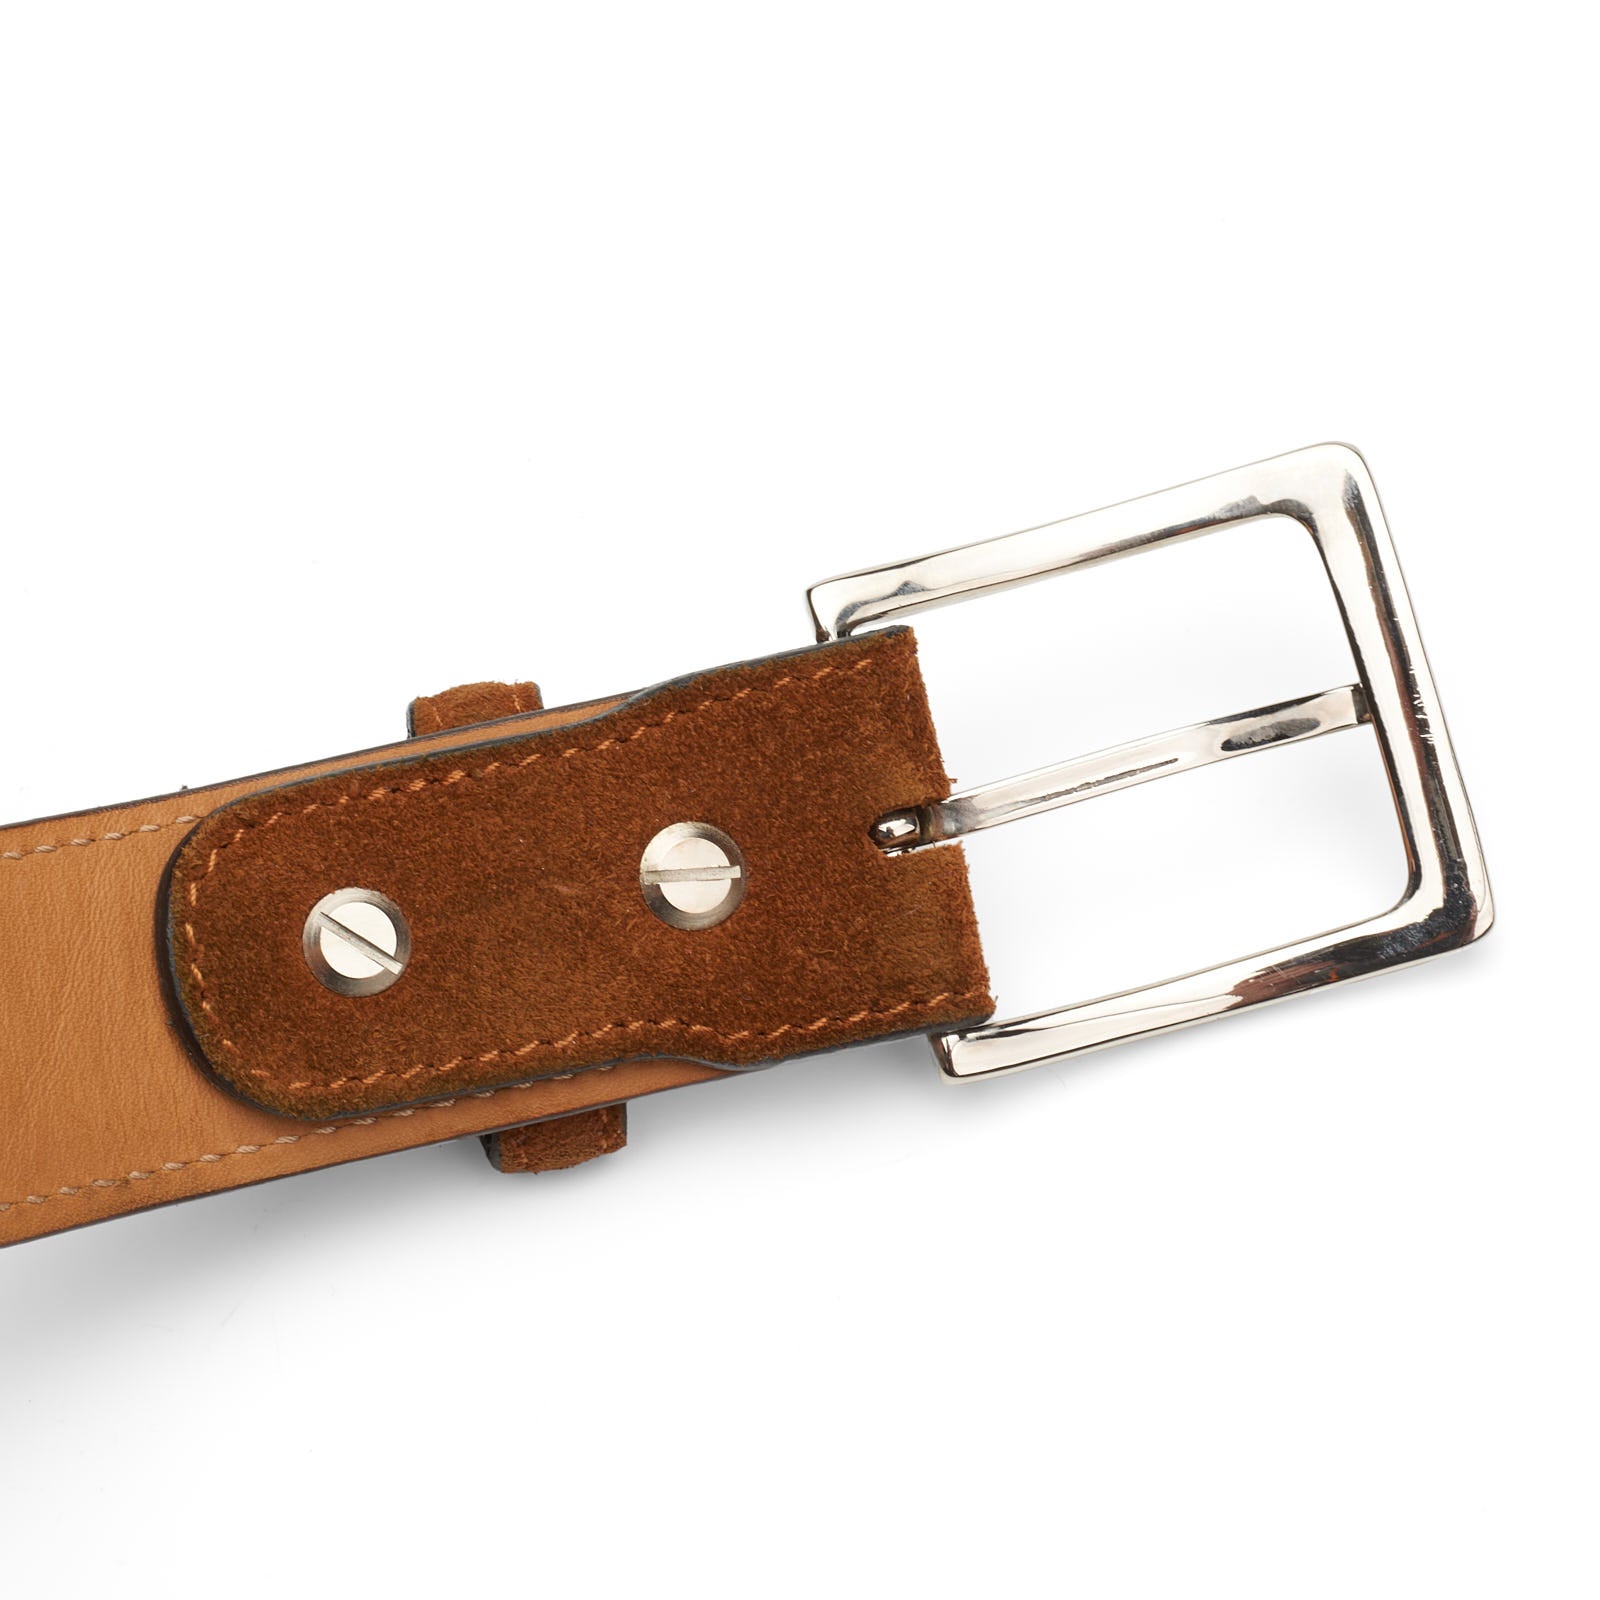 EDWARD GREEN Handmade Tan Suede Leather Belt with Silver-Tone Buckle 90cm 36" EDWARD GREEN